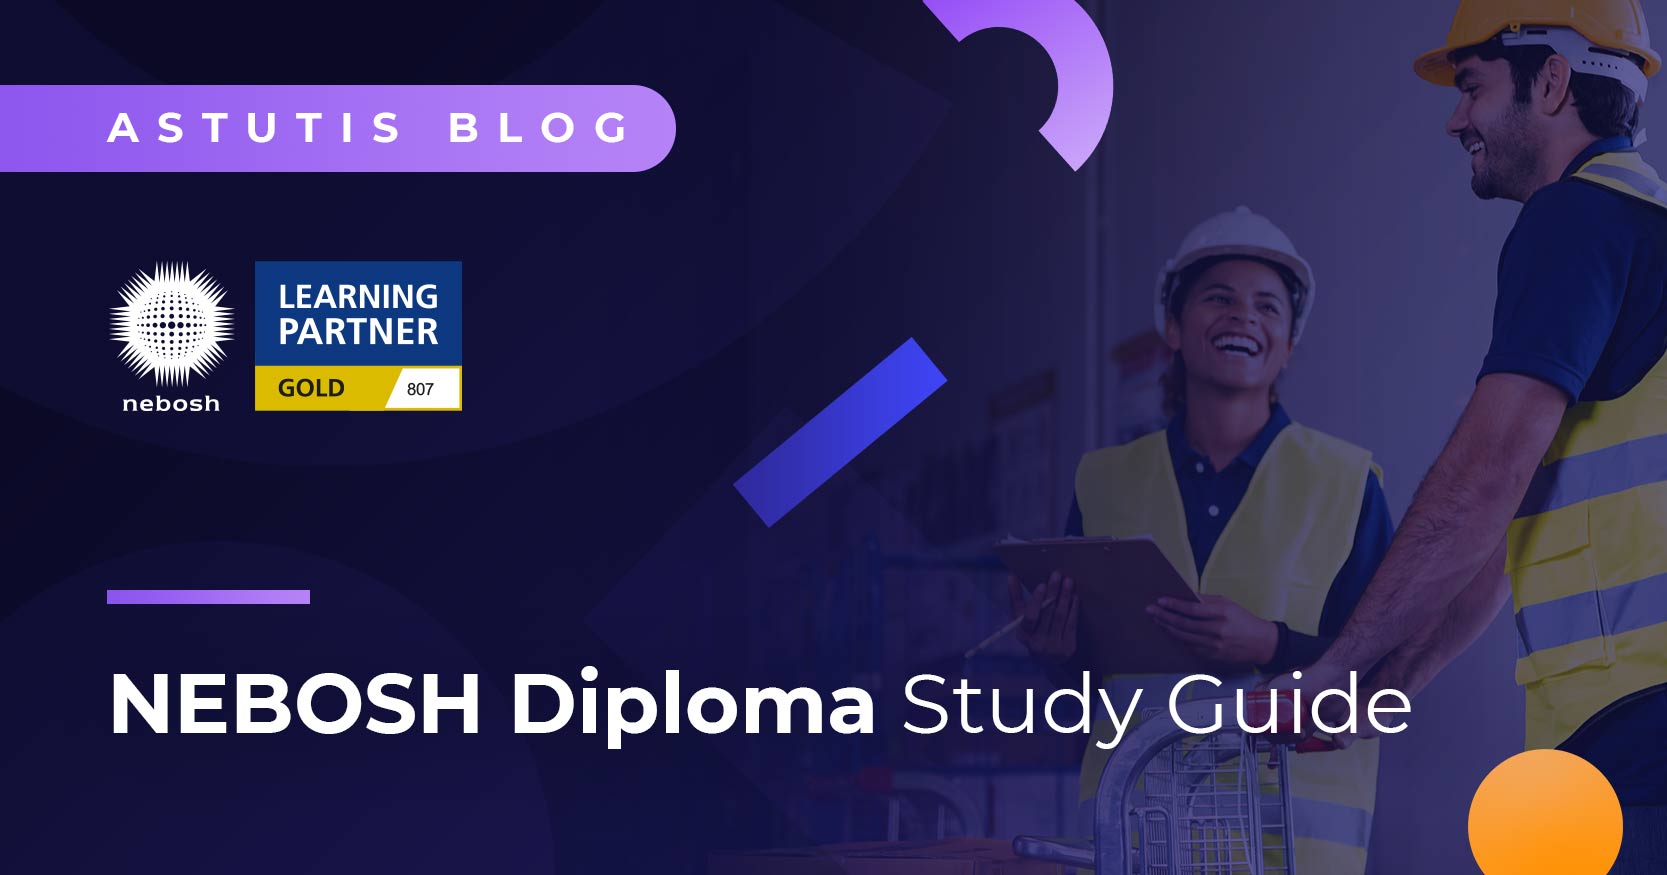 NEBOSH Diploma Study Guide Image